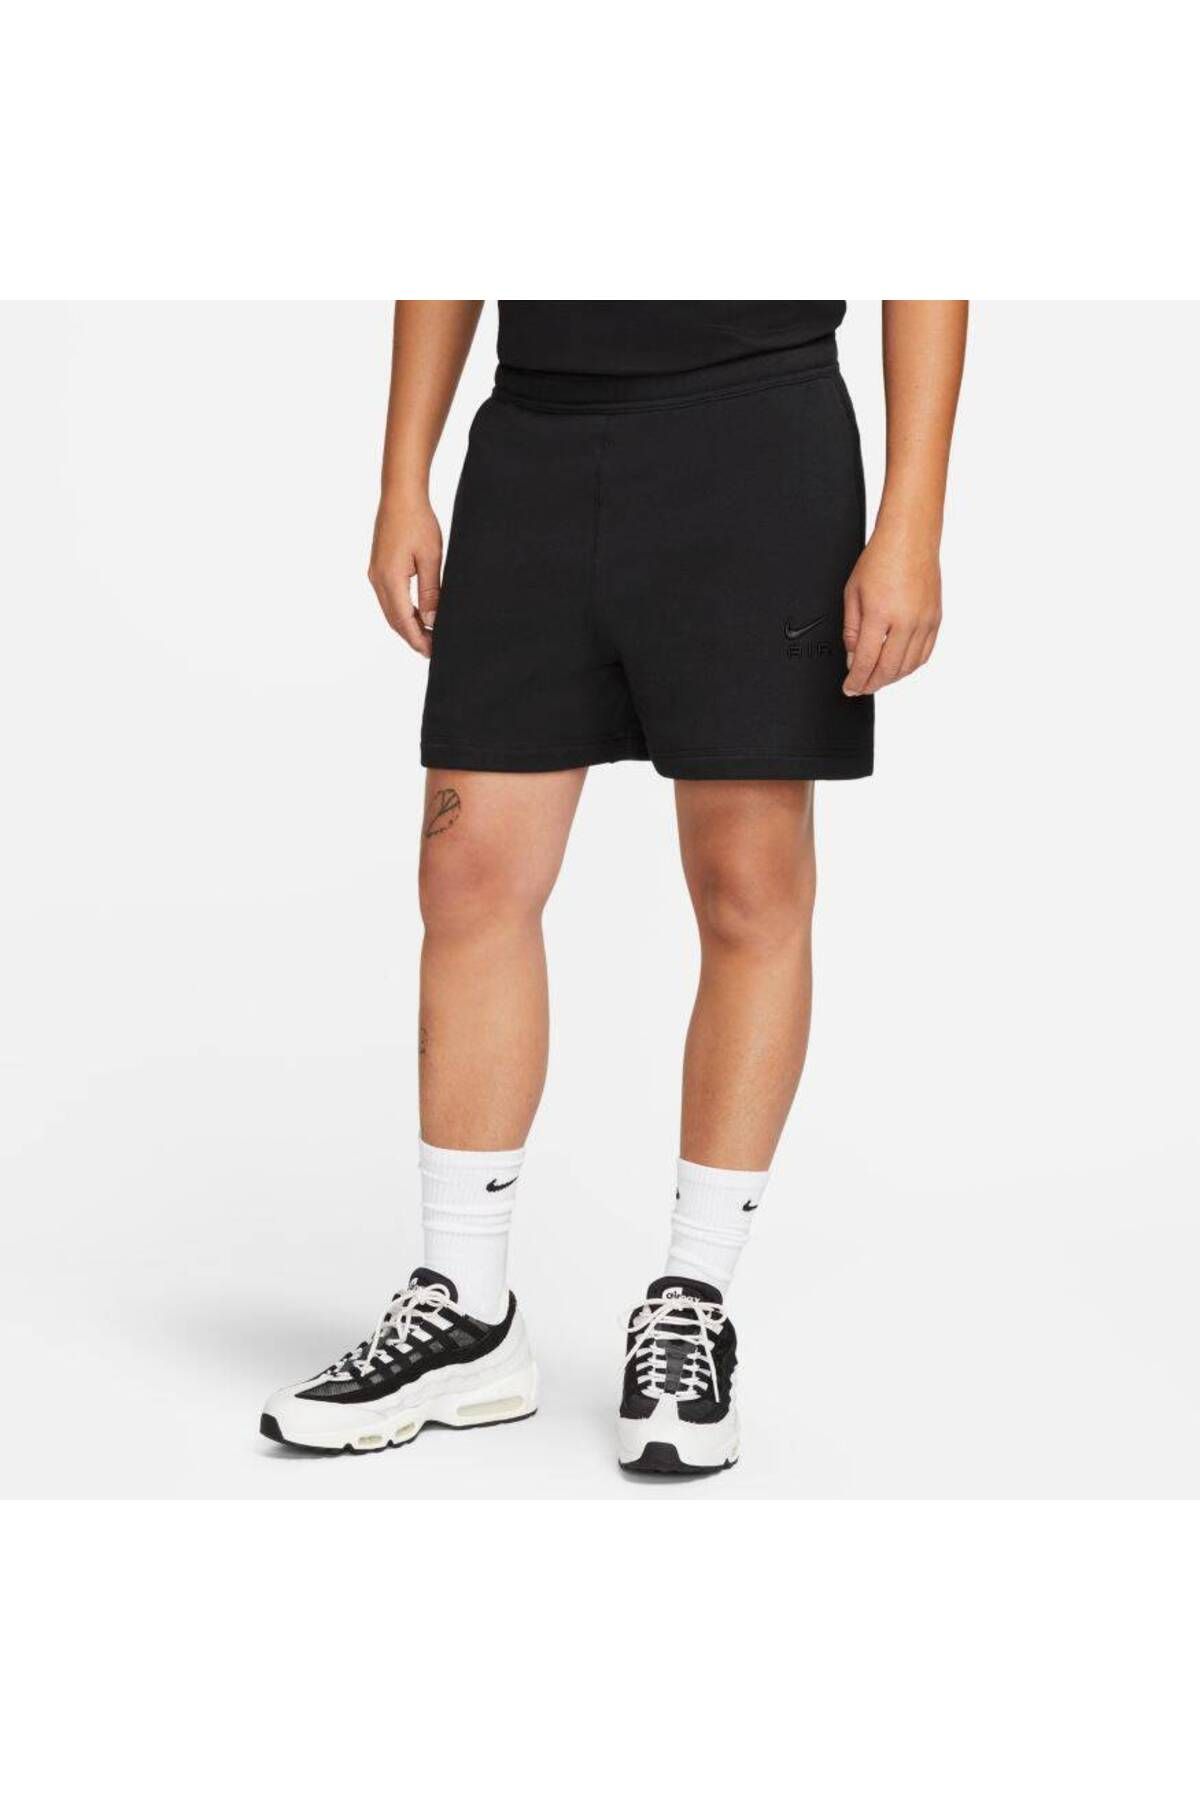 Shorts Nike Air French Terry Masculino Black